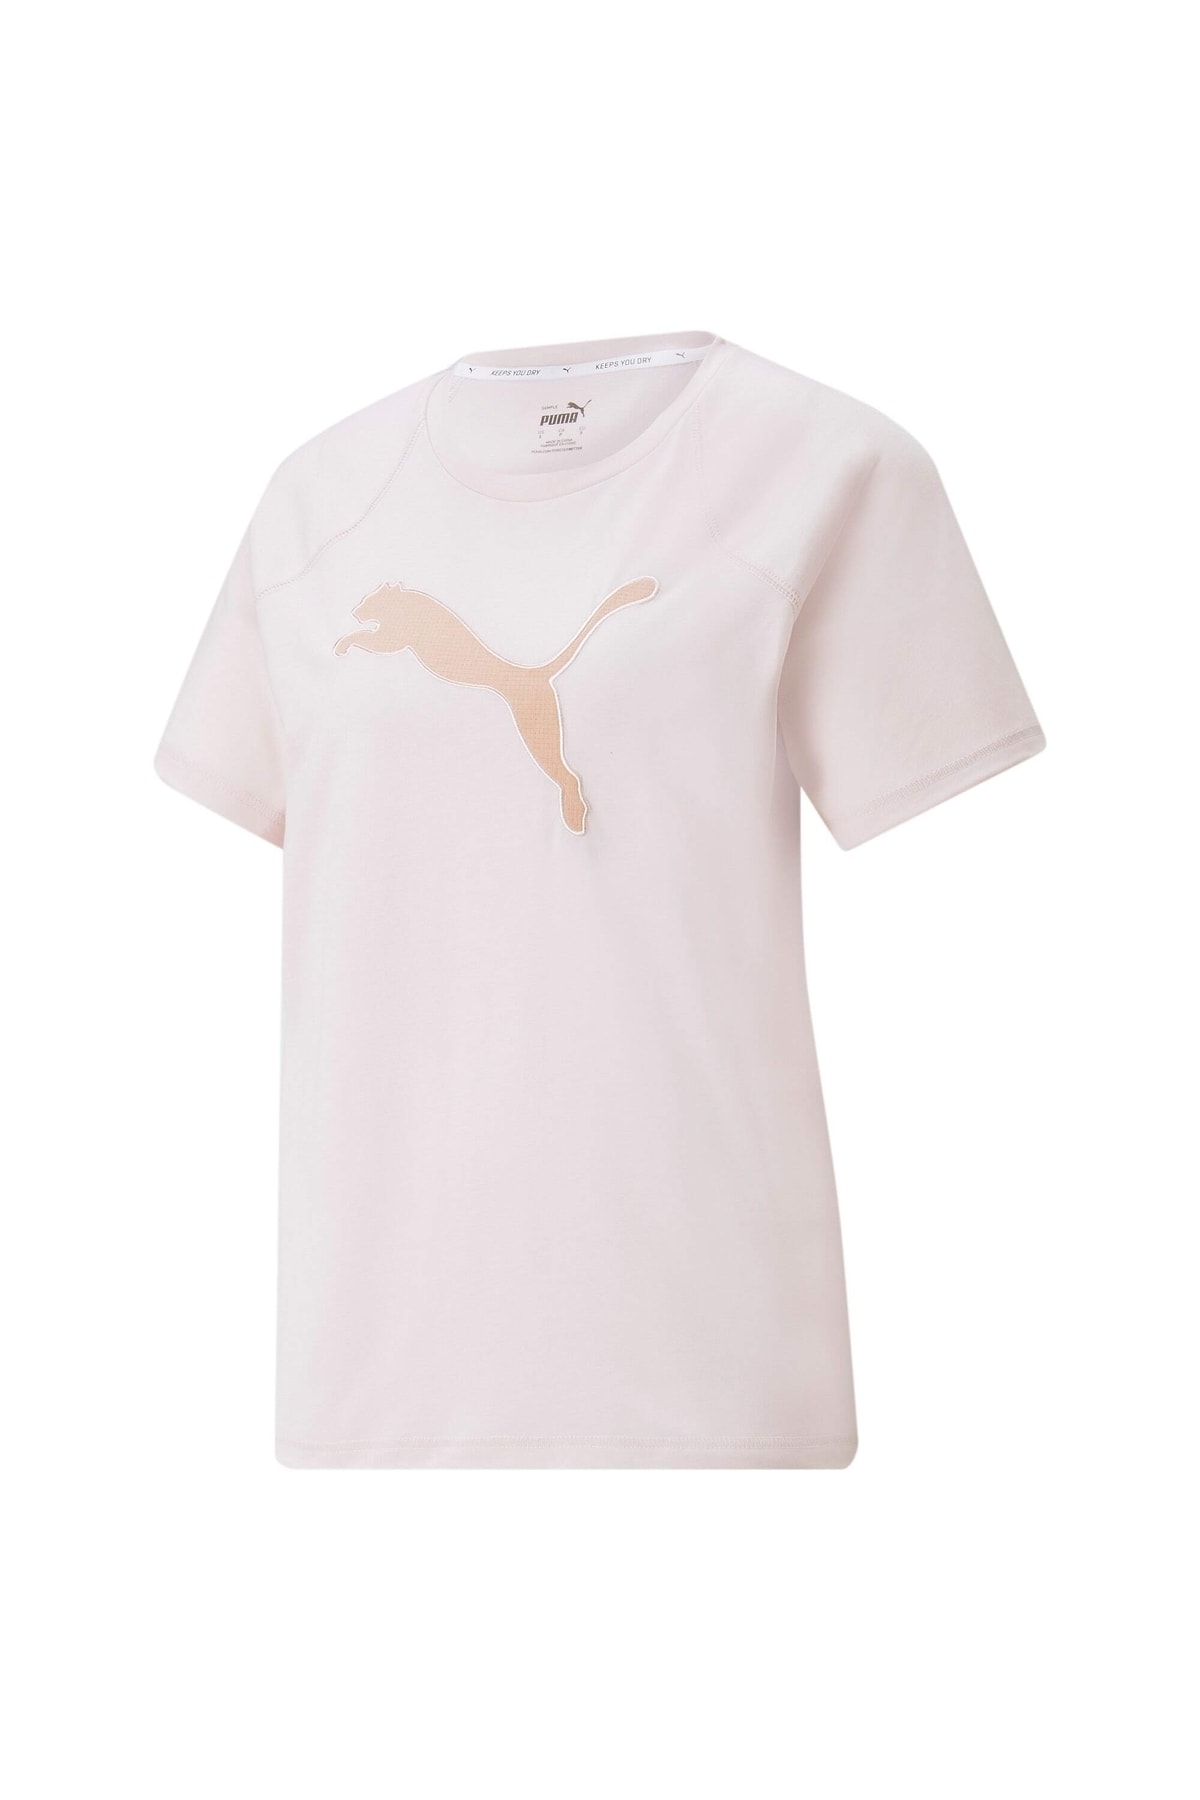 Puma Evostrıpe Summer Kadın T-shirt